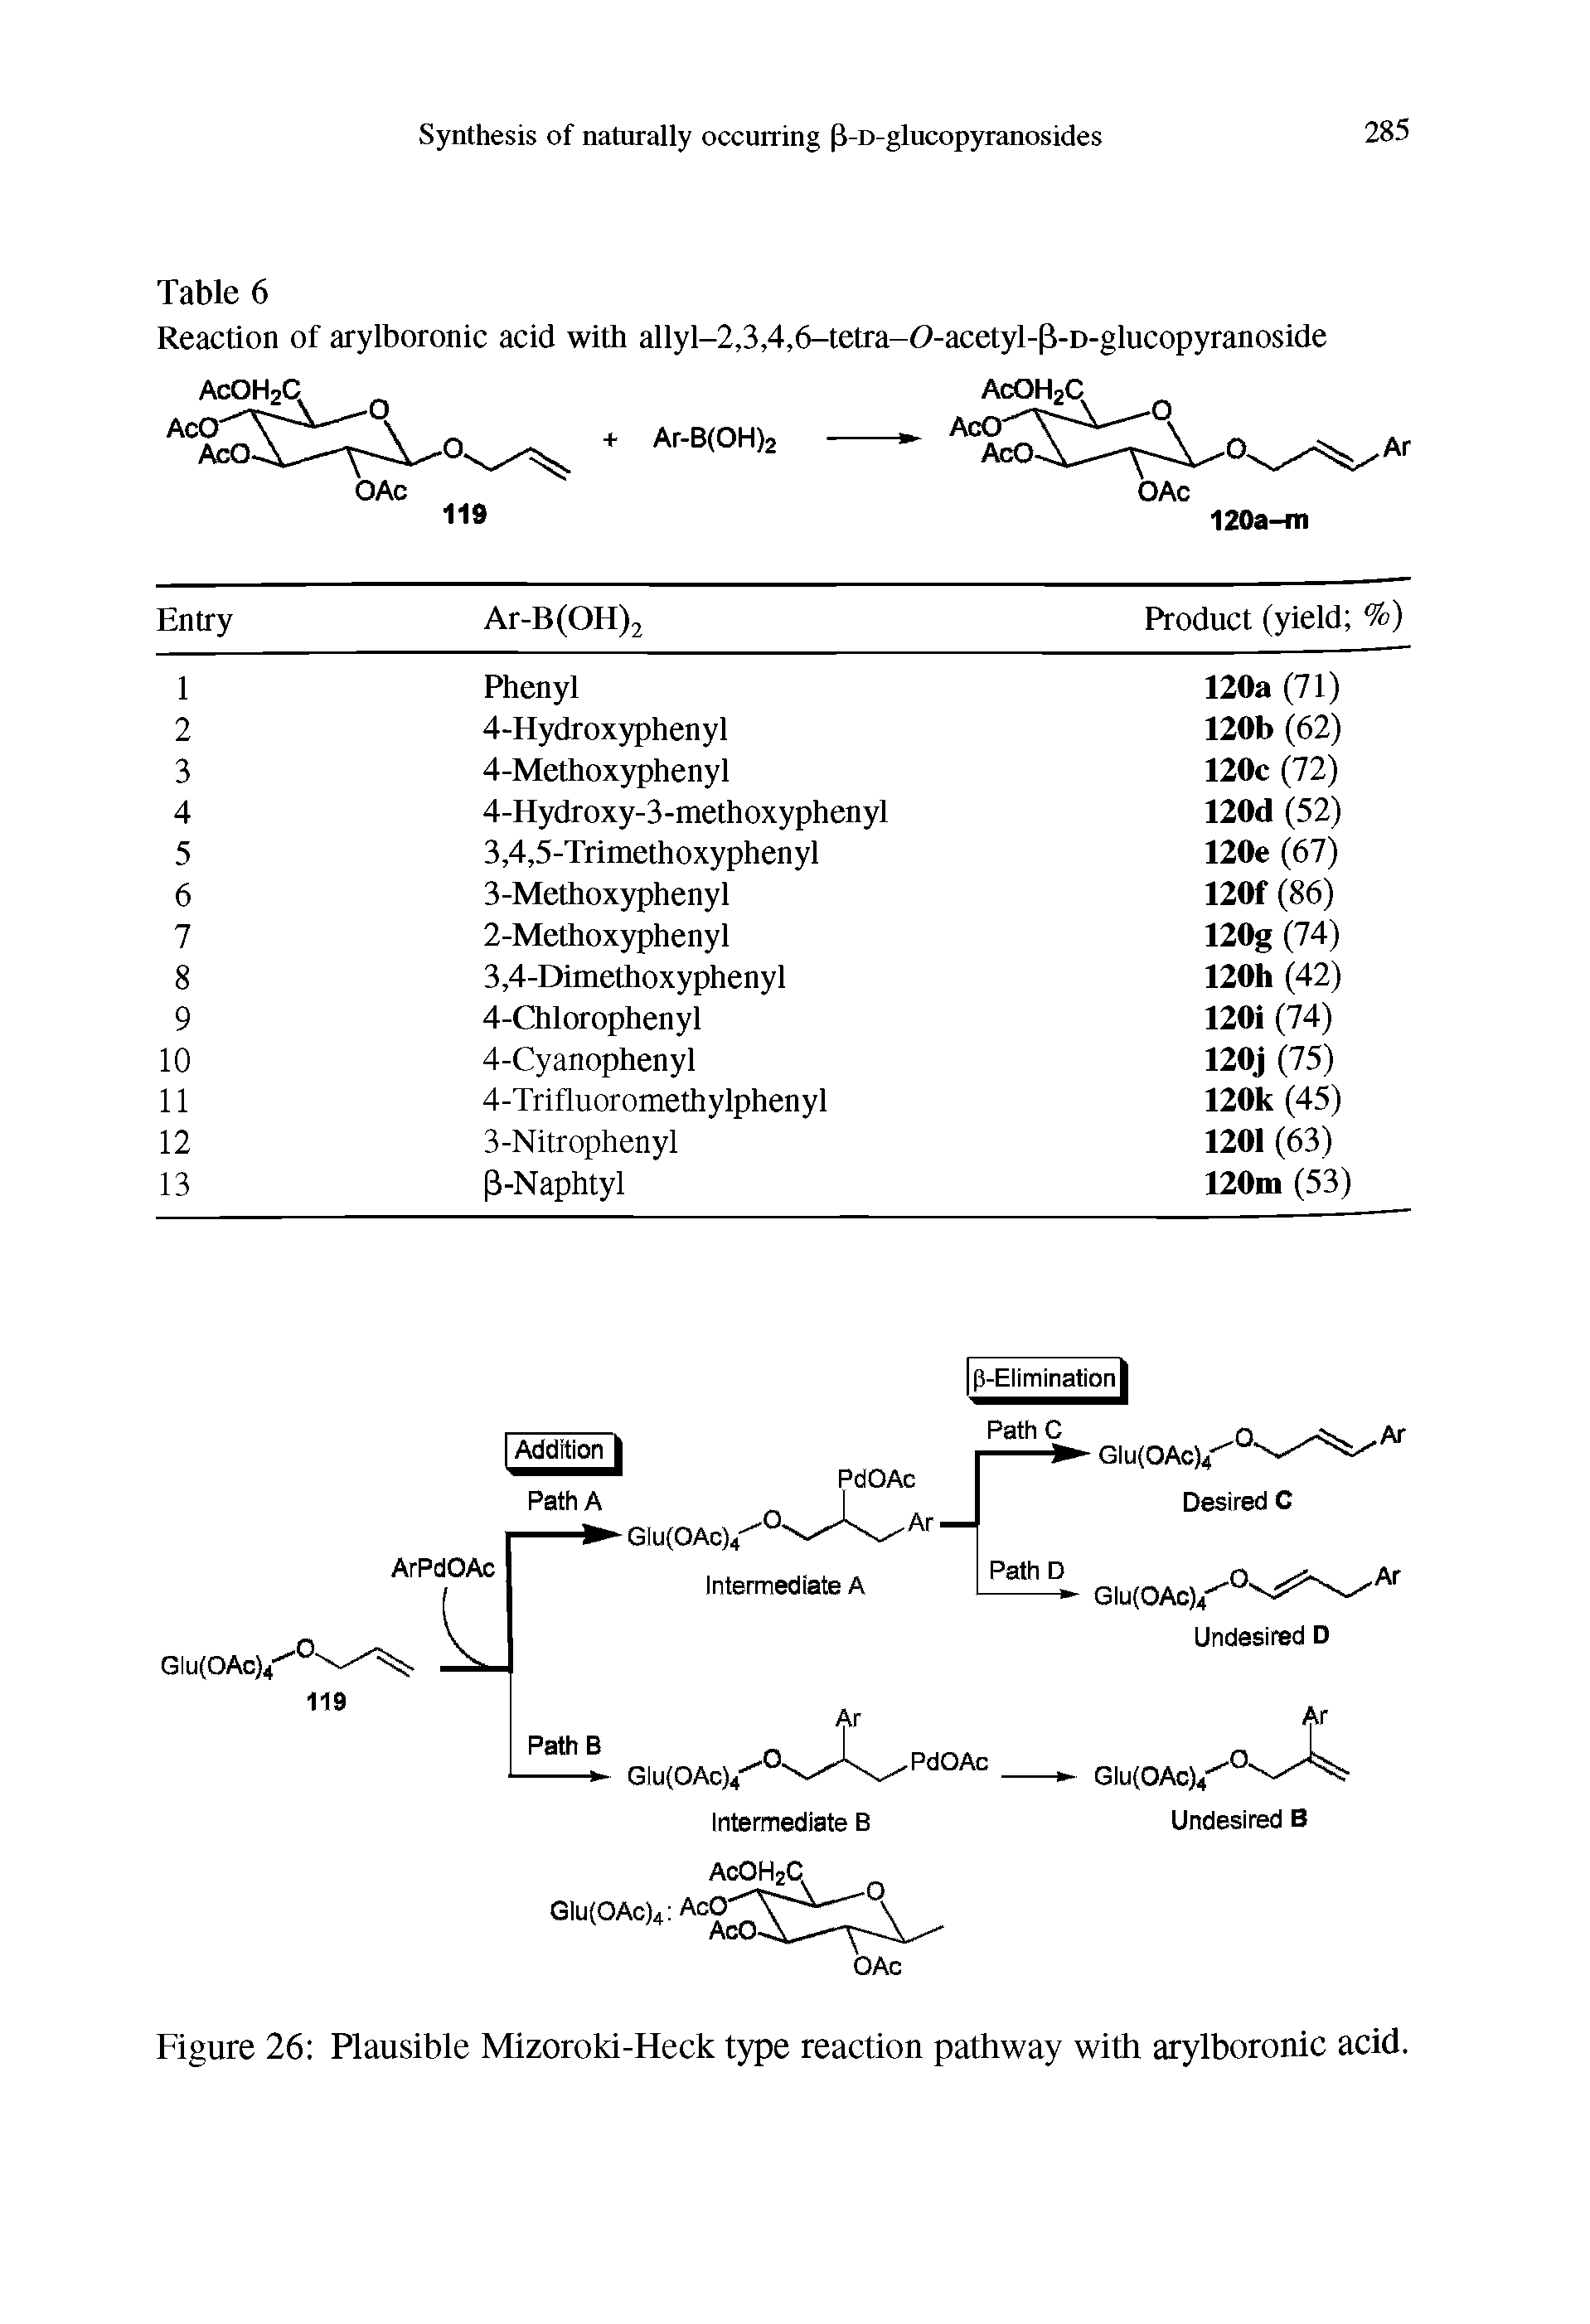 Figure 26 Plausible Mizoroki-Heck type reaction pathway with arylboronic acid.